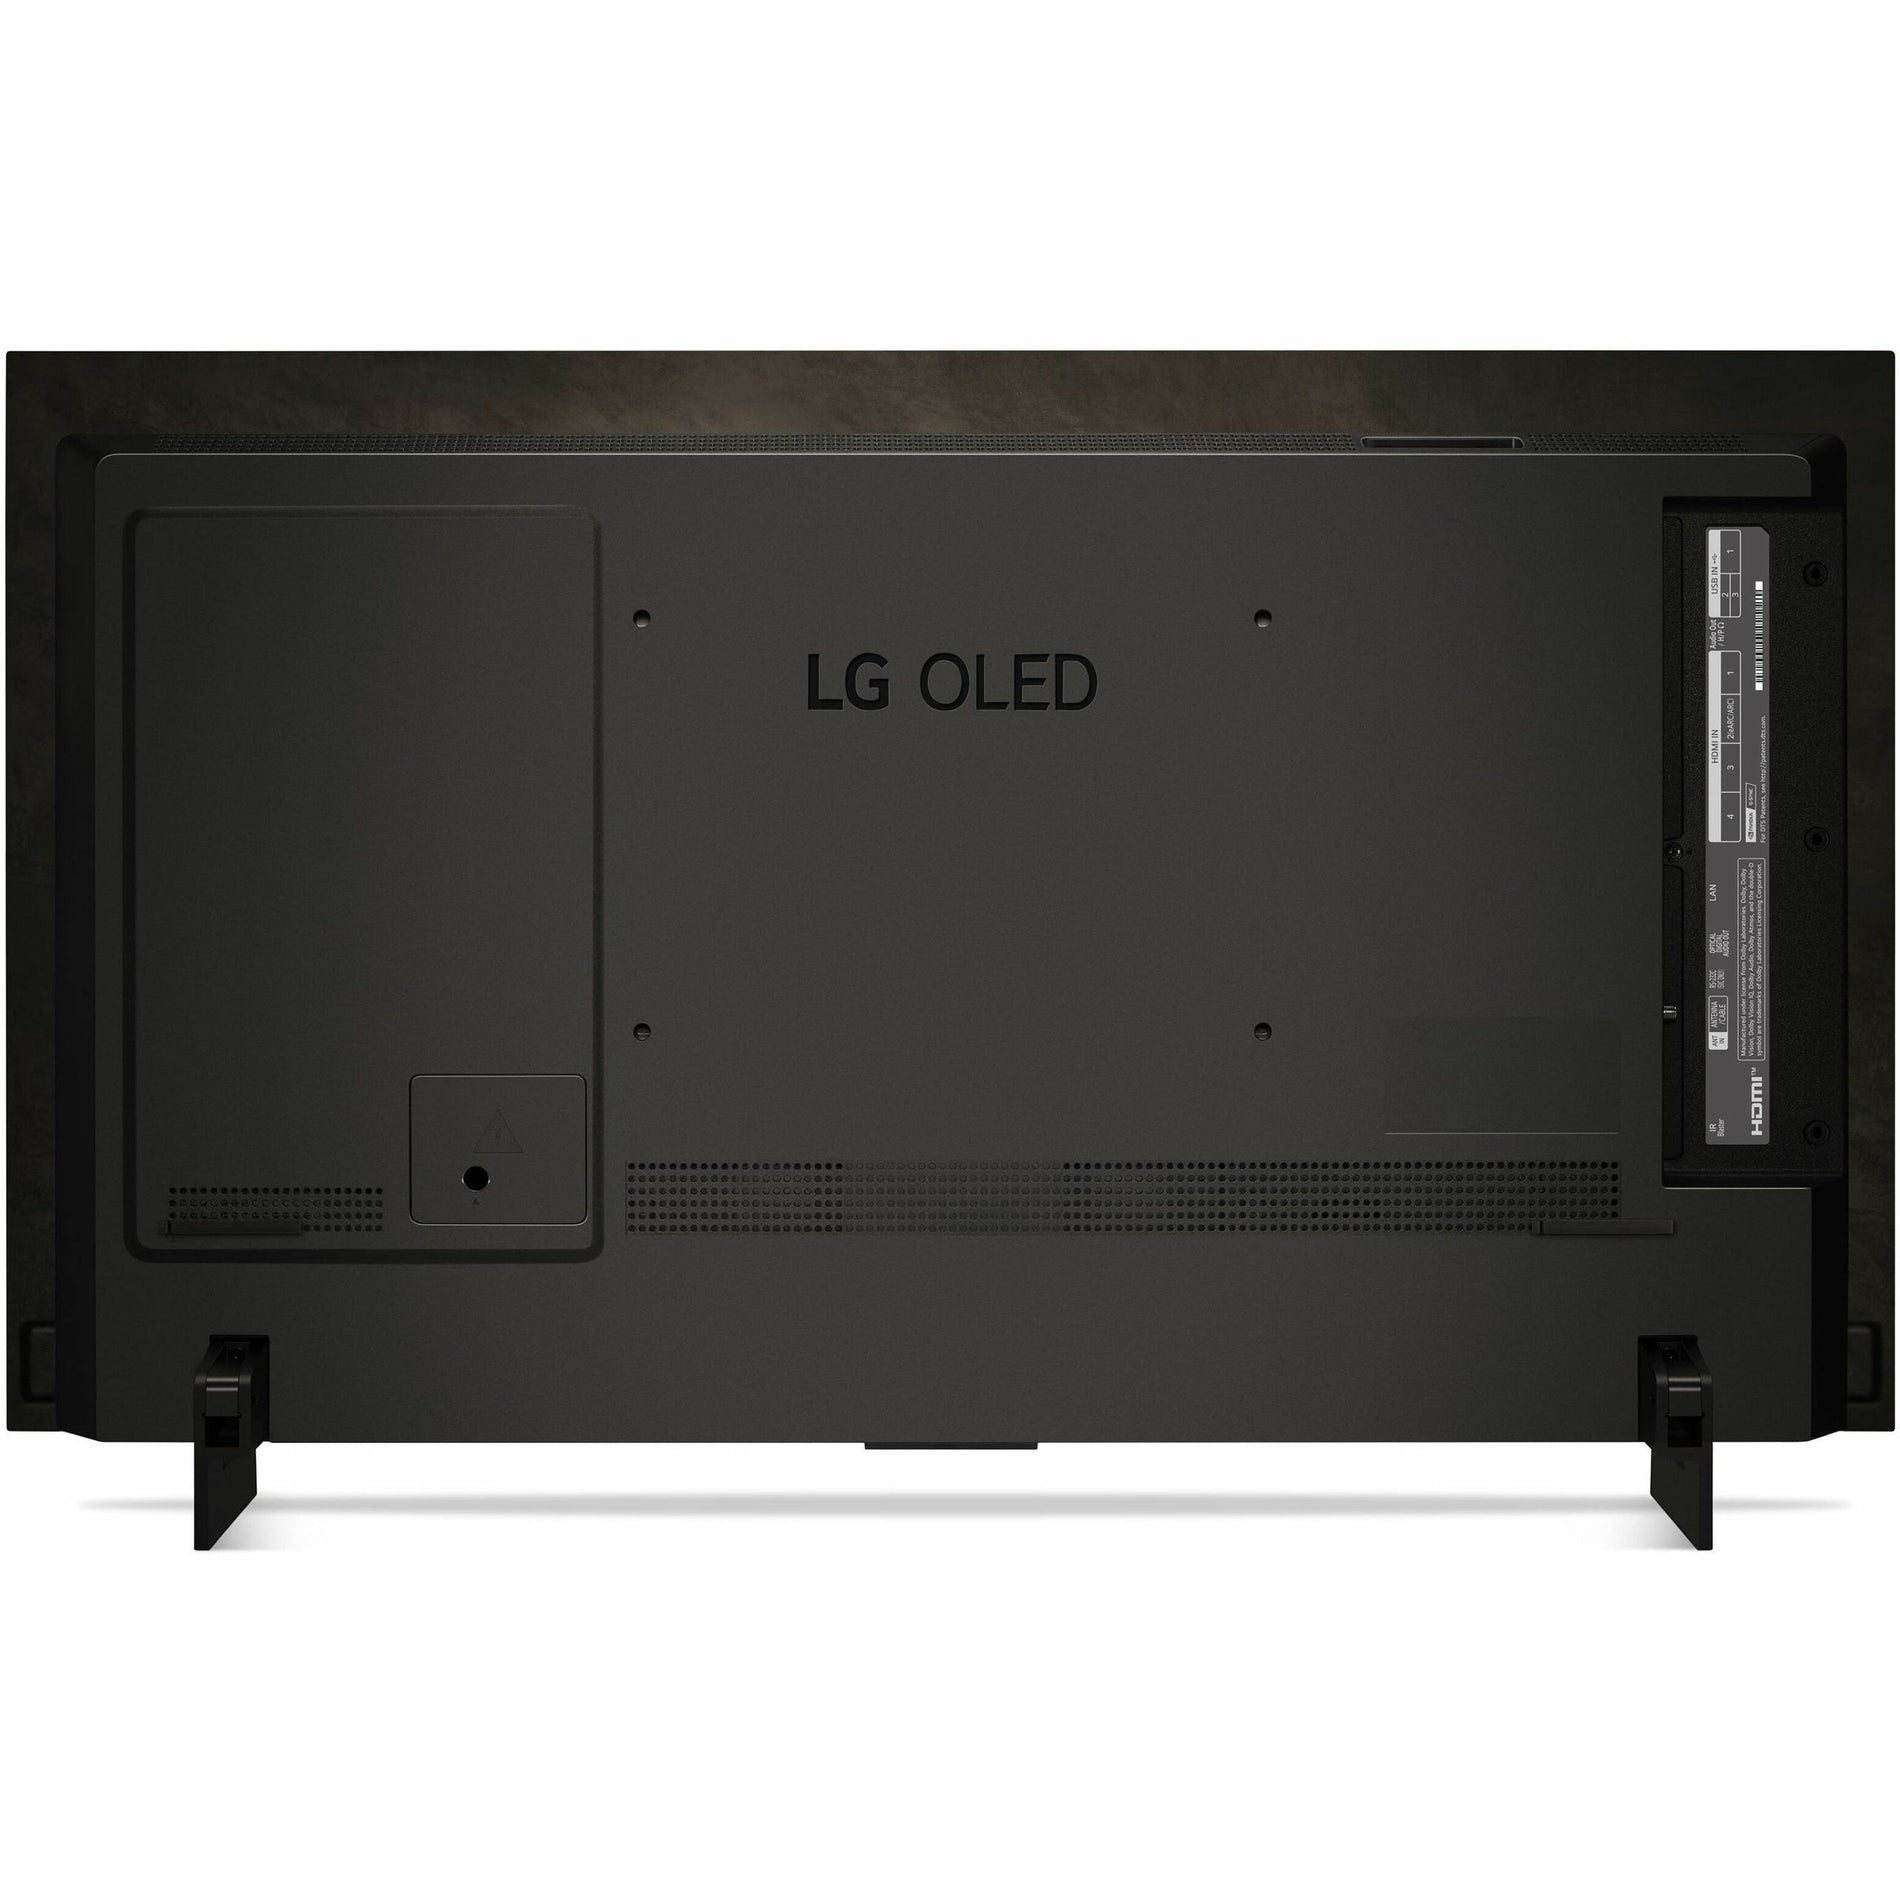 LG evo C4 OLED42C4PUA 42.1" Smart OLED TV - 4K UHDTV